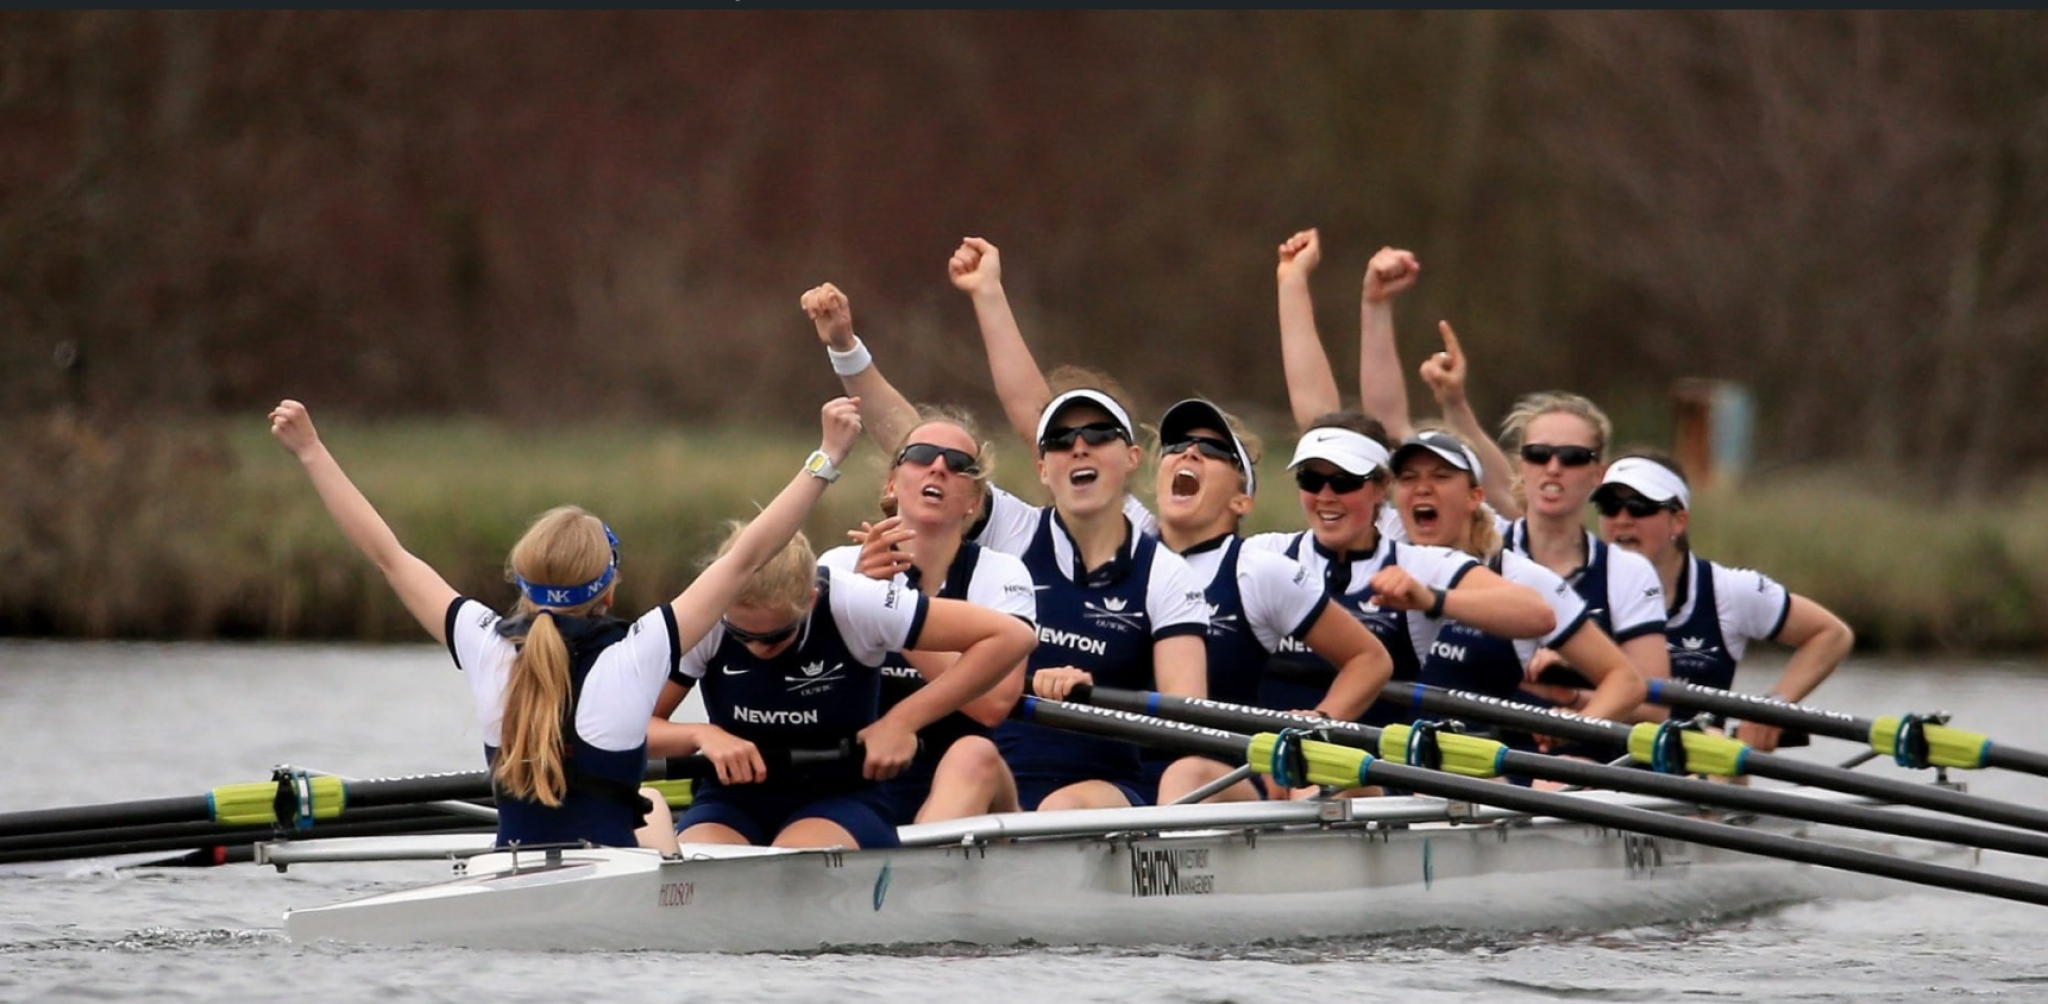 Oxford boat race.